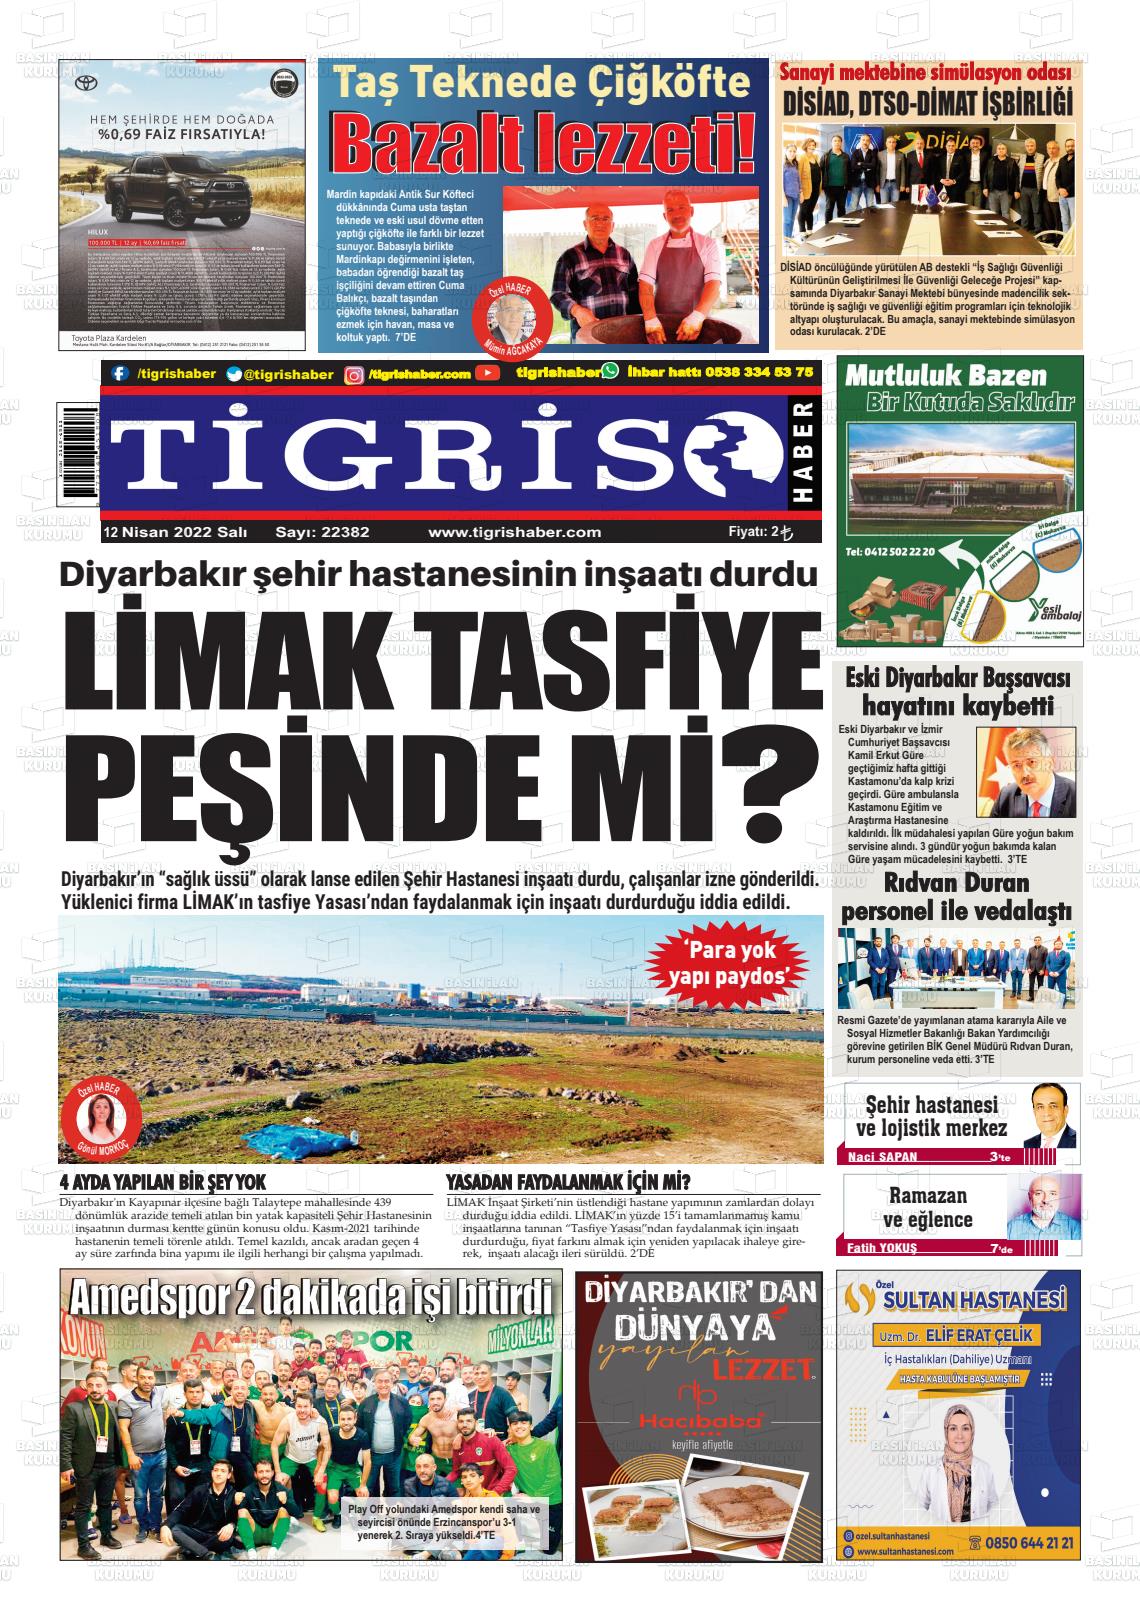 12 nisan 2022 tarihli tigris haber gazete manşetleri